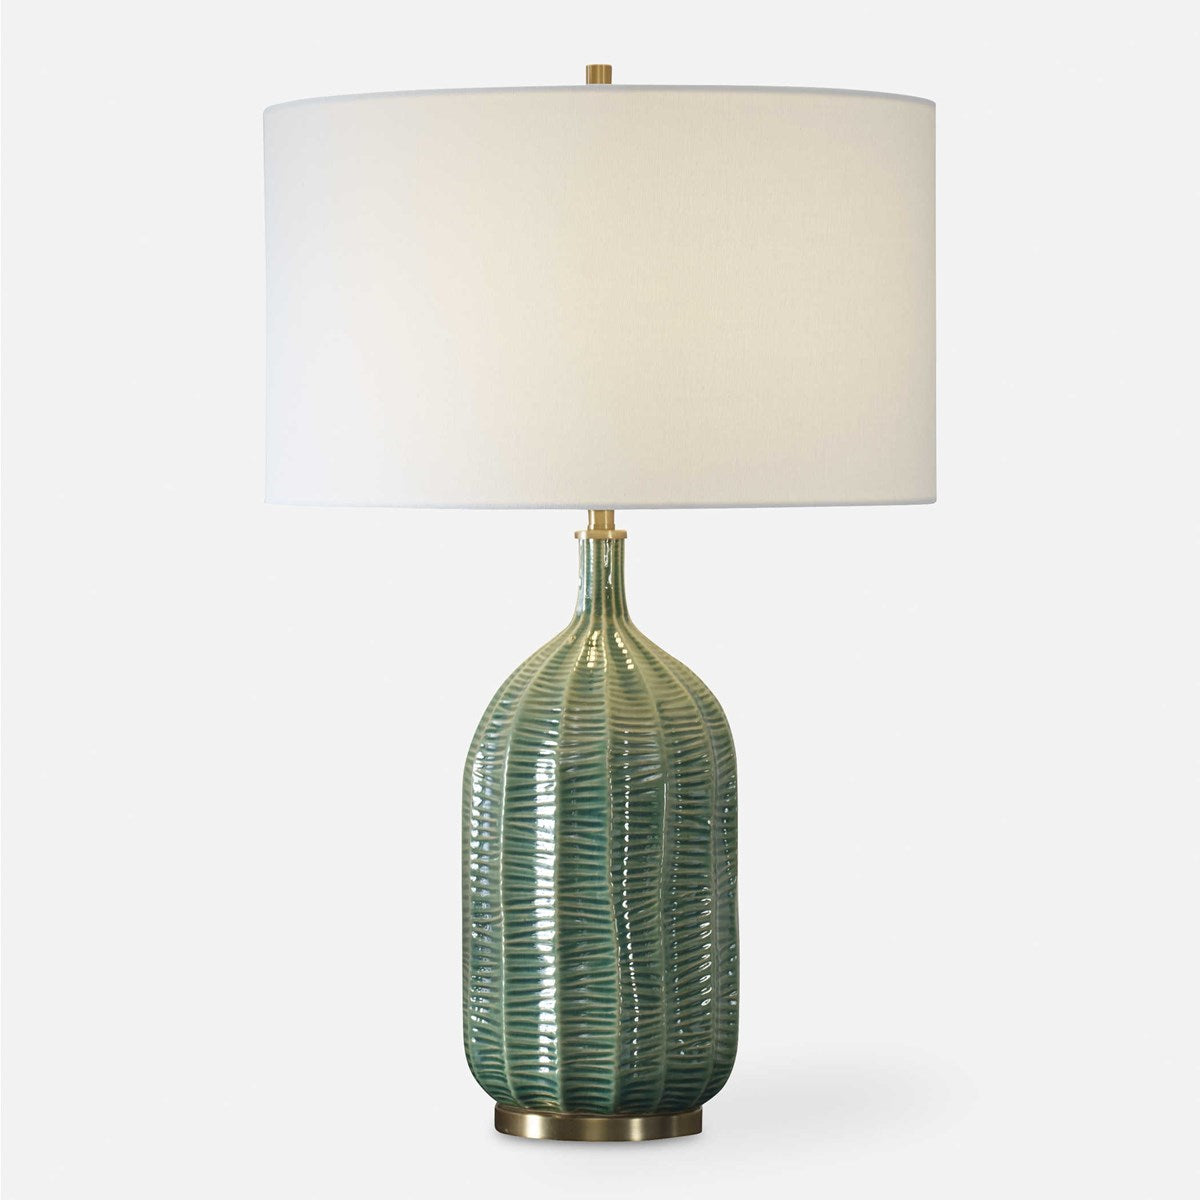 Uttermost - 30378-1 - One Light Table Lamp - Bixby - Antique Brass